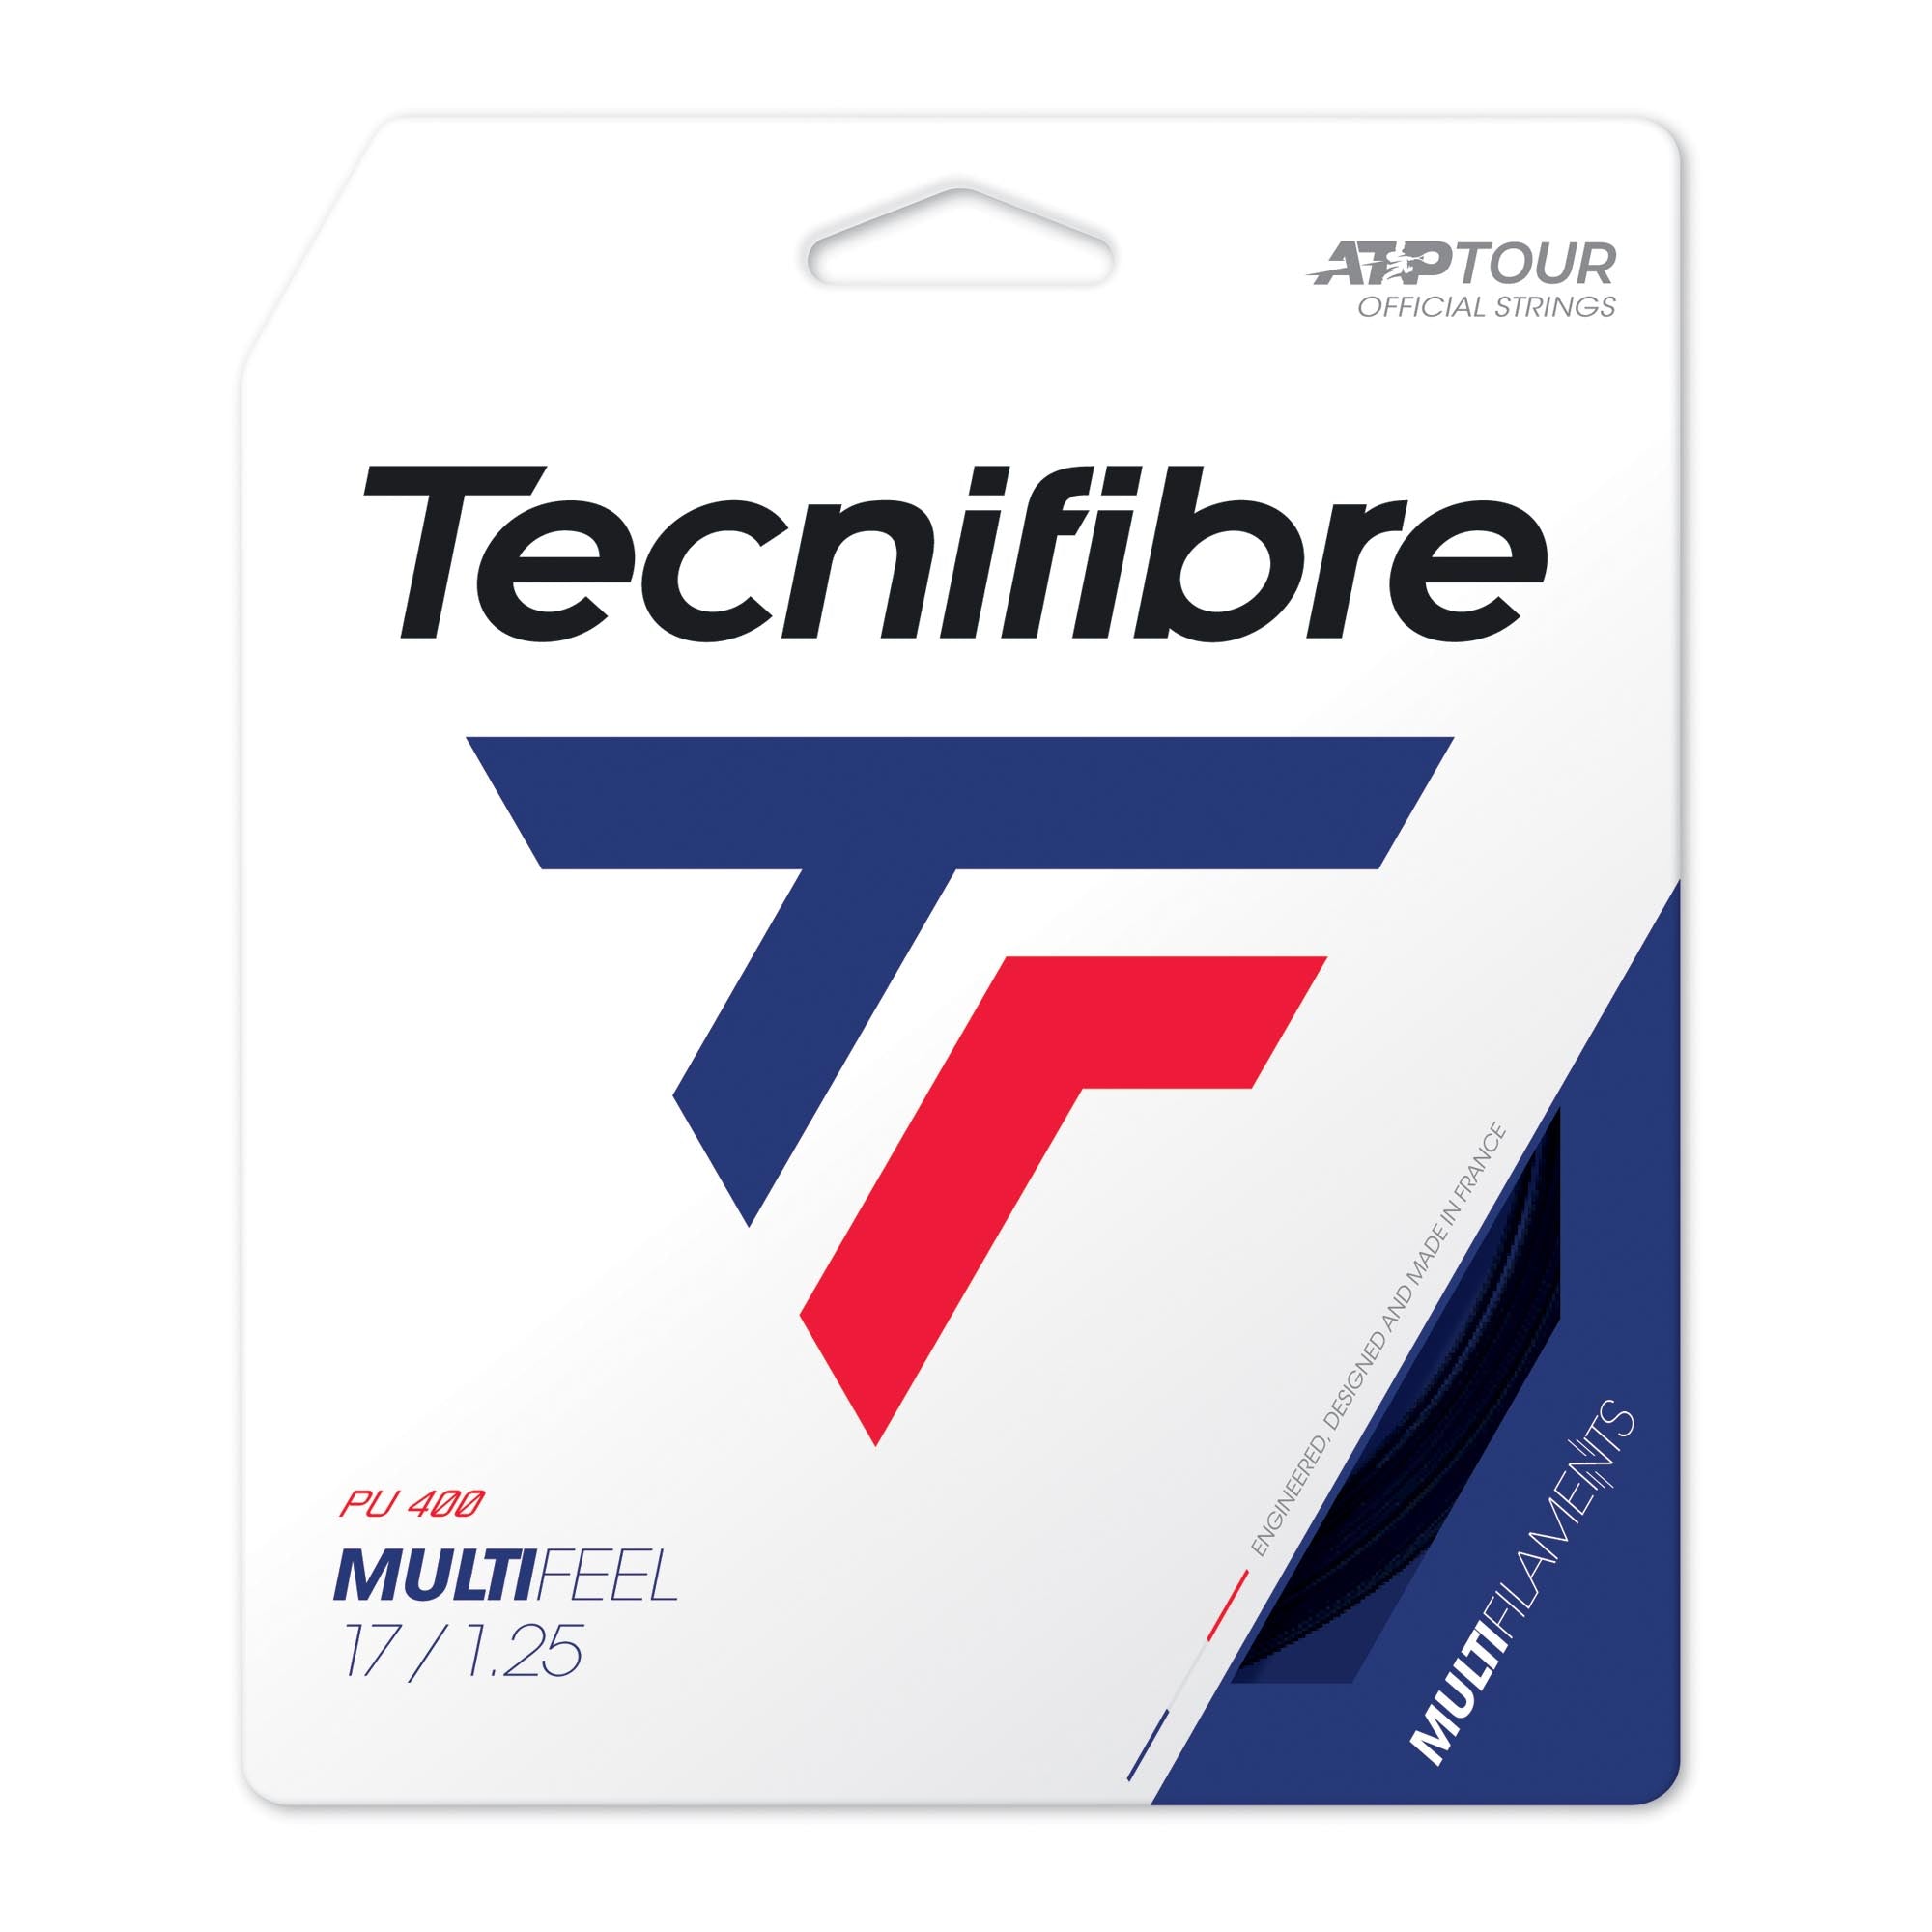 Tecnifibre MultiFeel Tennis String Set